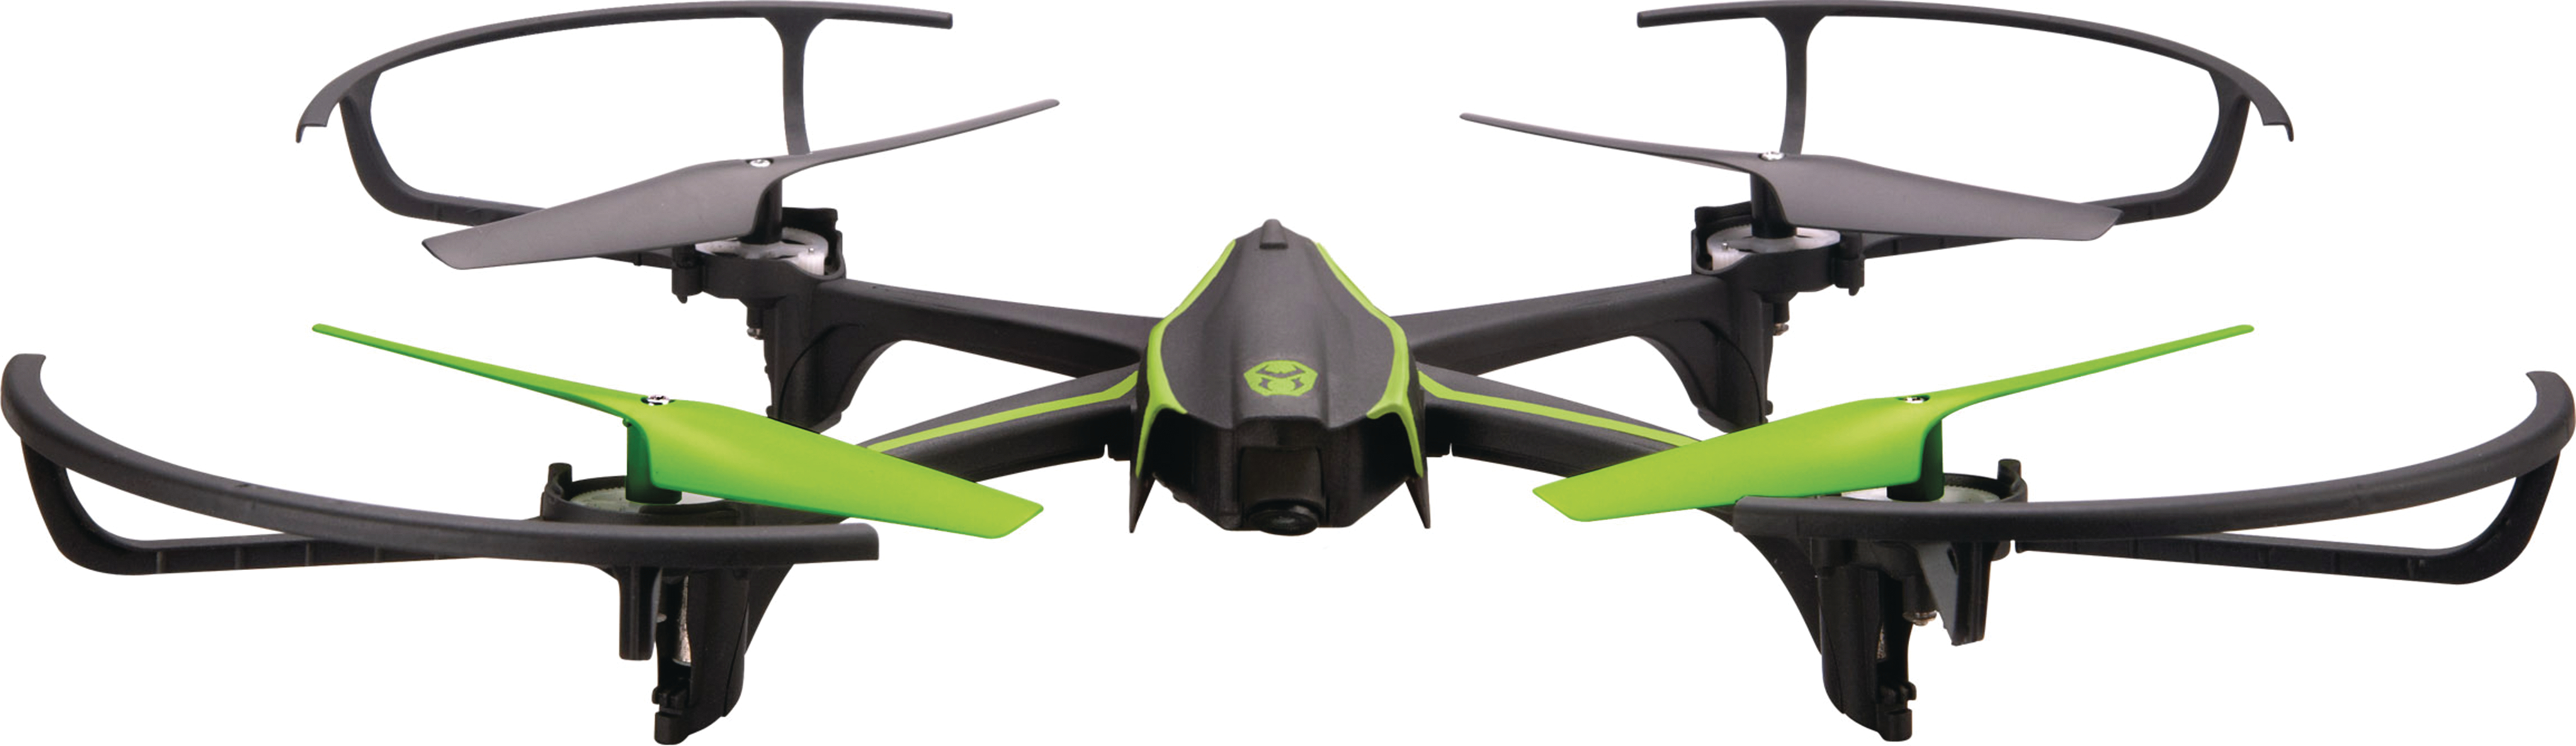 skyrocket viper drone